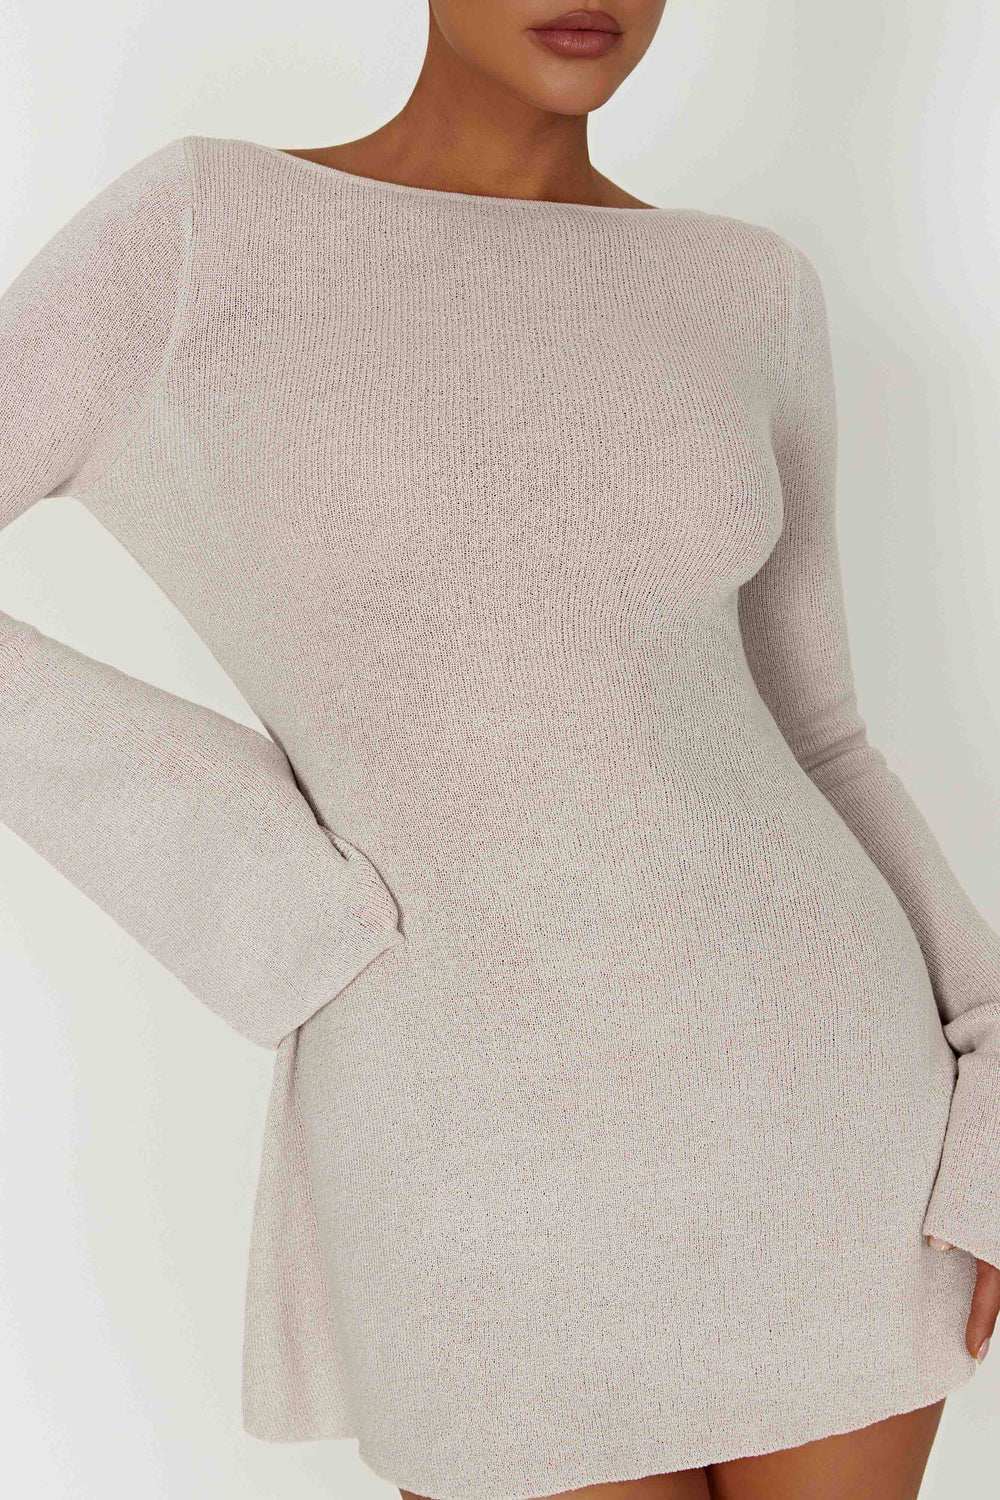 Zahra Long Sleeve Open Back Mini Knit Dress - Grey